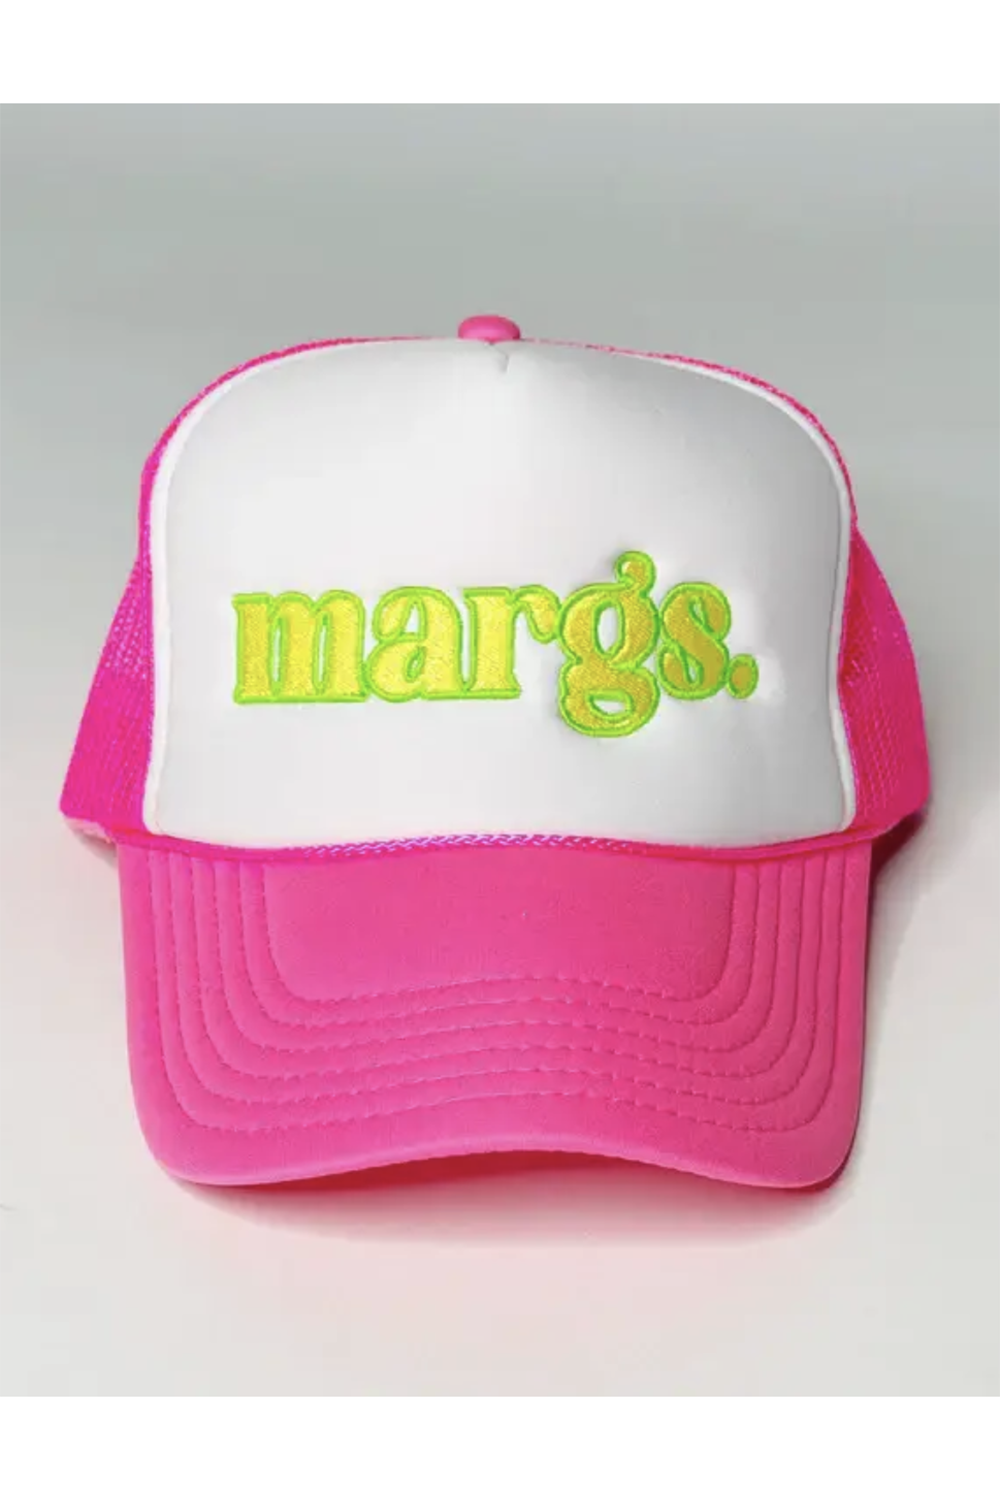 MARGS Trucker Hat - Neon Pink/ Yellow Green